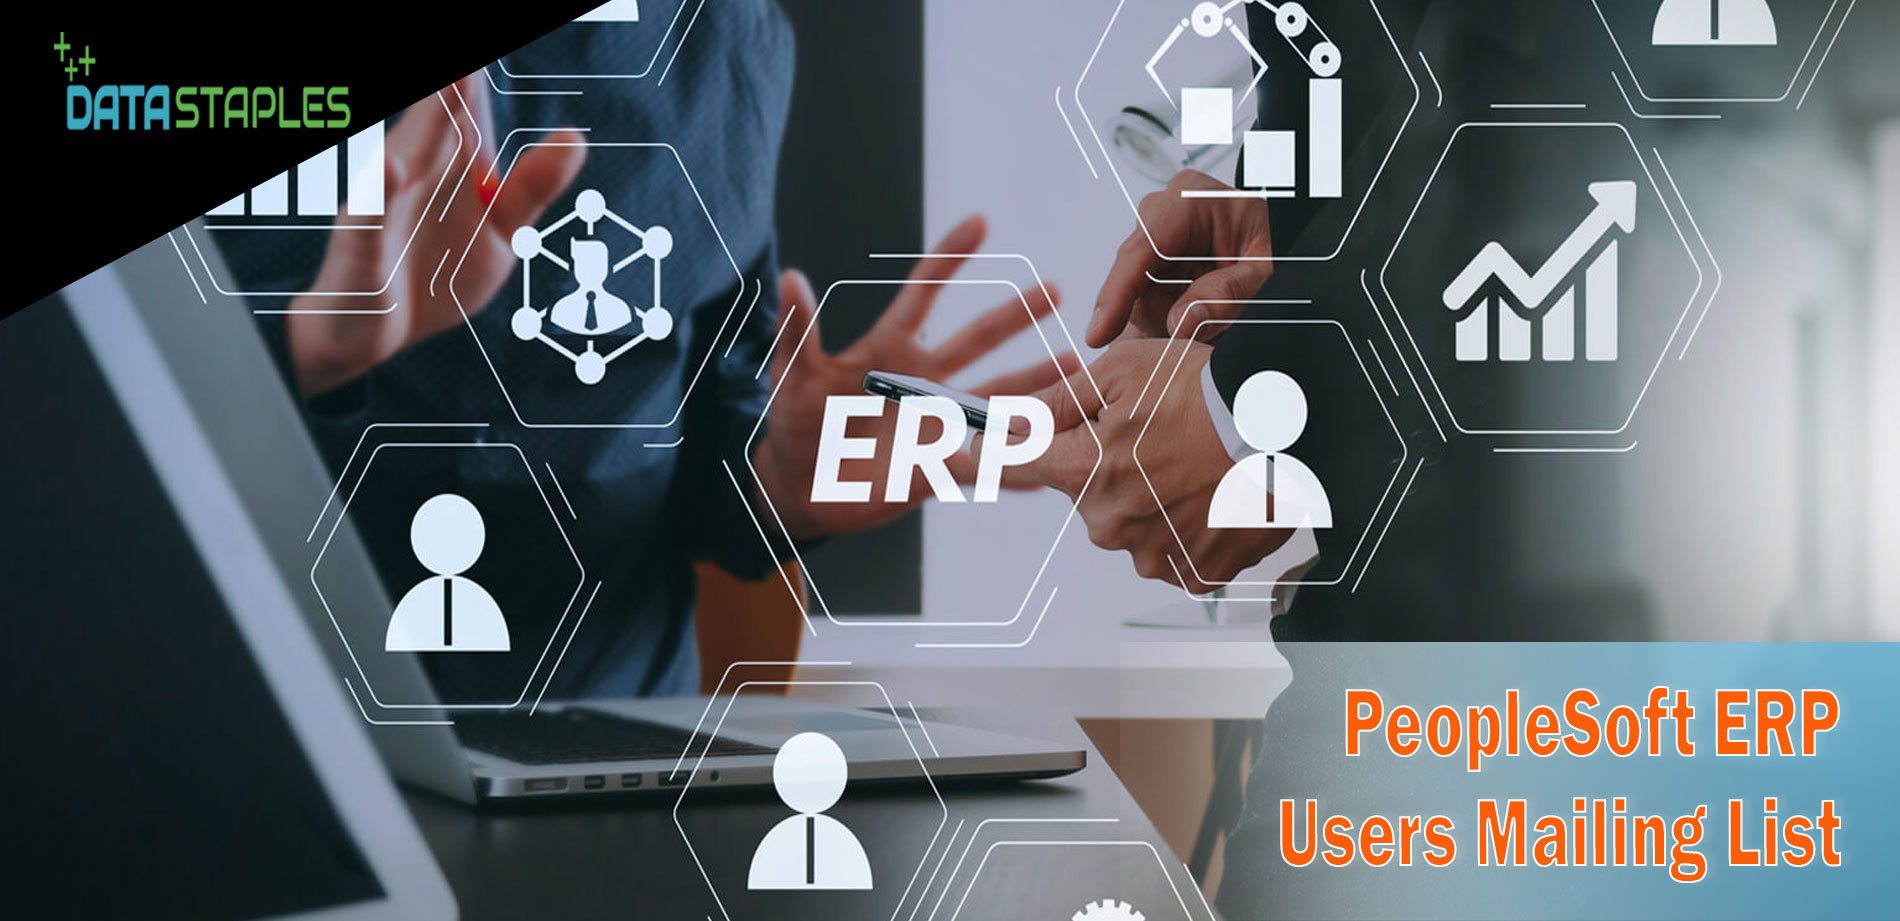 PeopleSoft ERP Users Mailing List | DataStaples